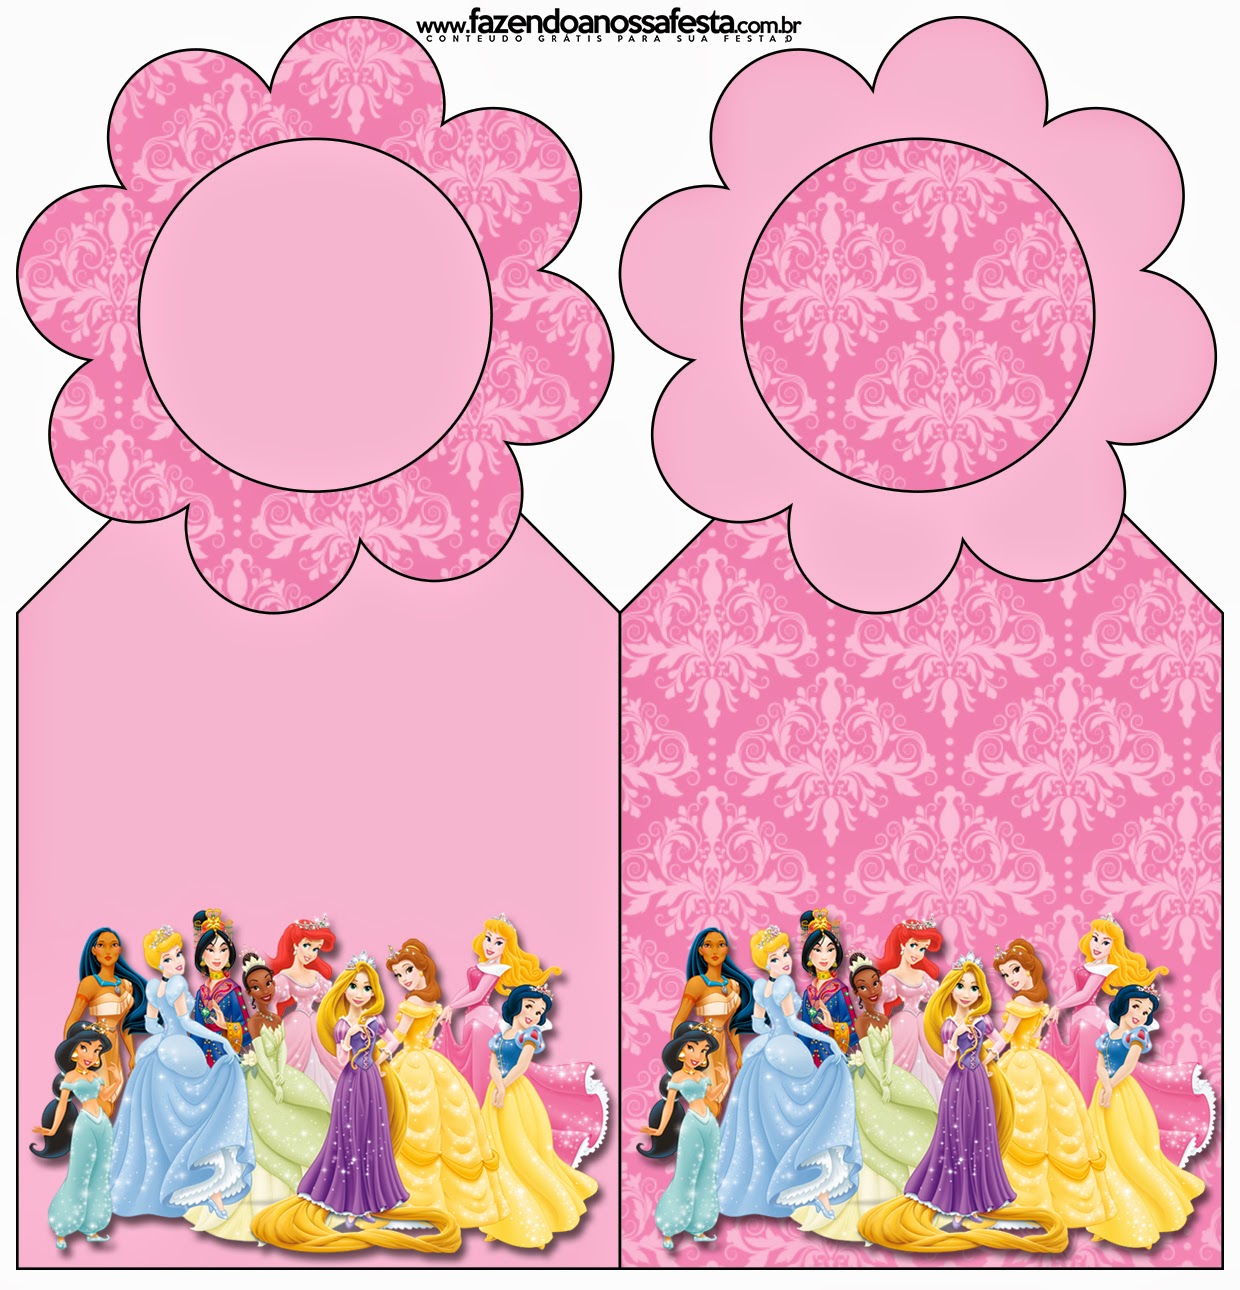 Free Disney Princess Party Printables Printable Templates